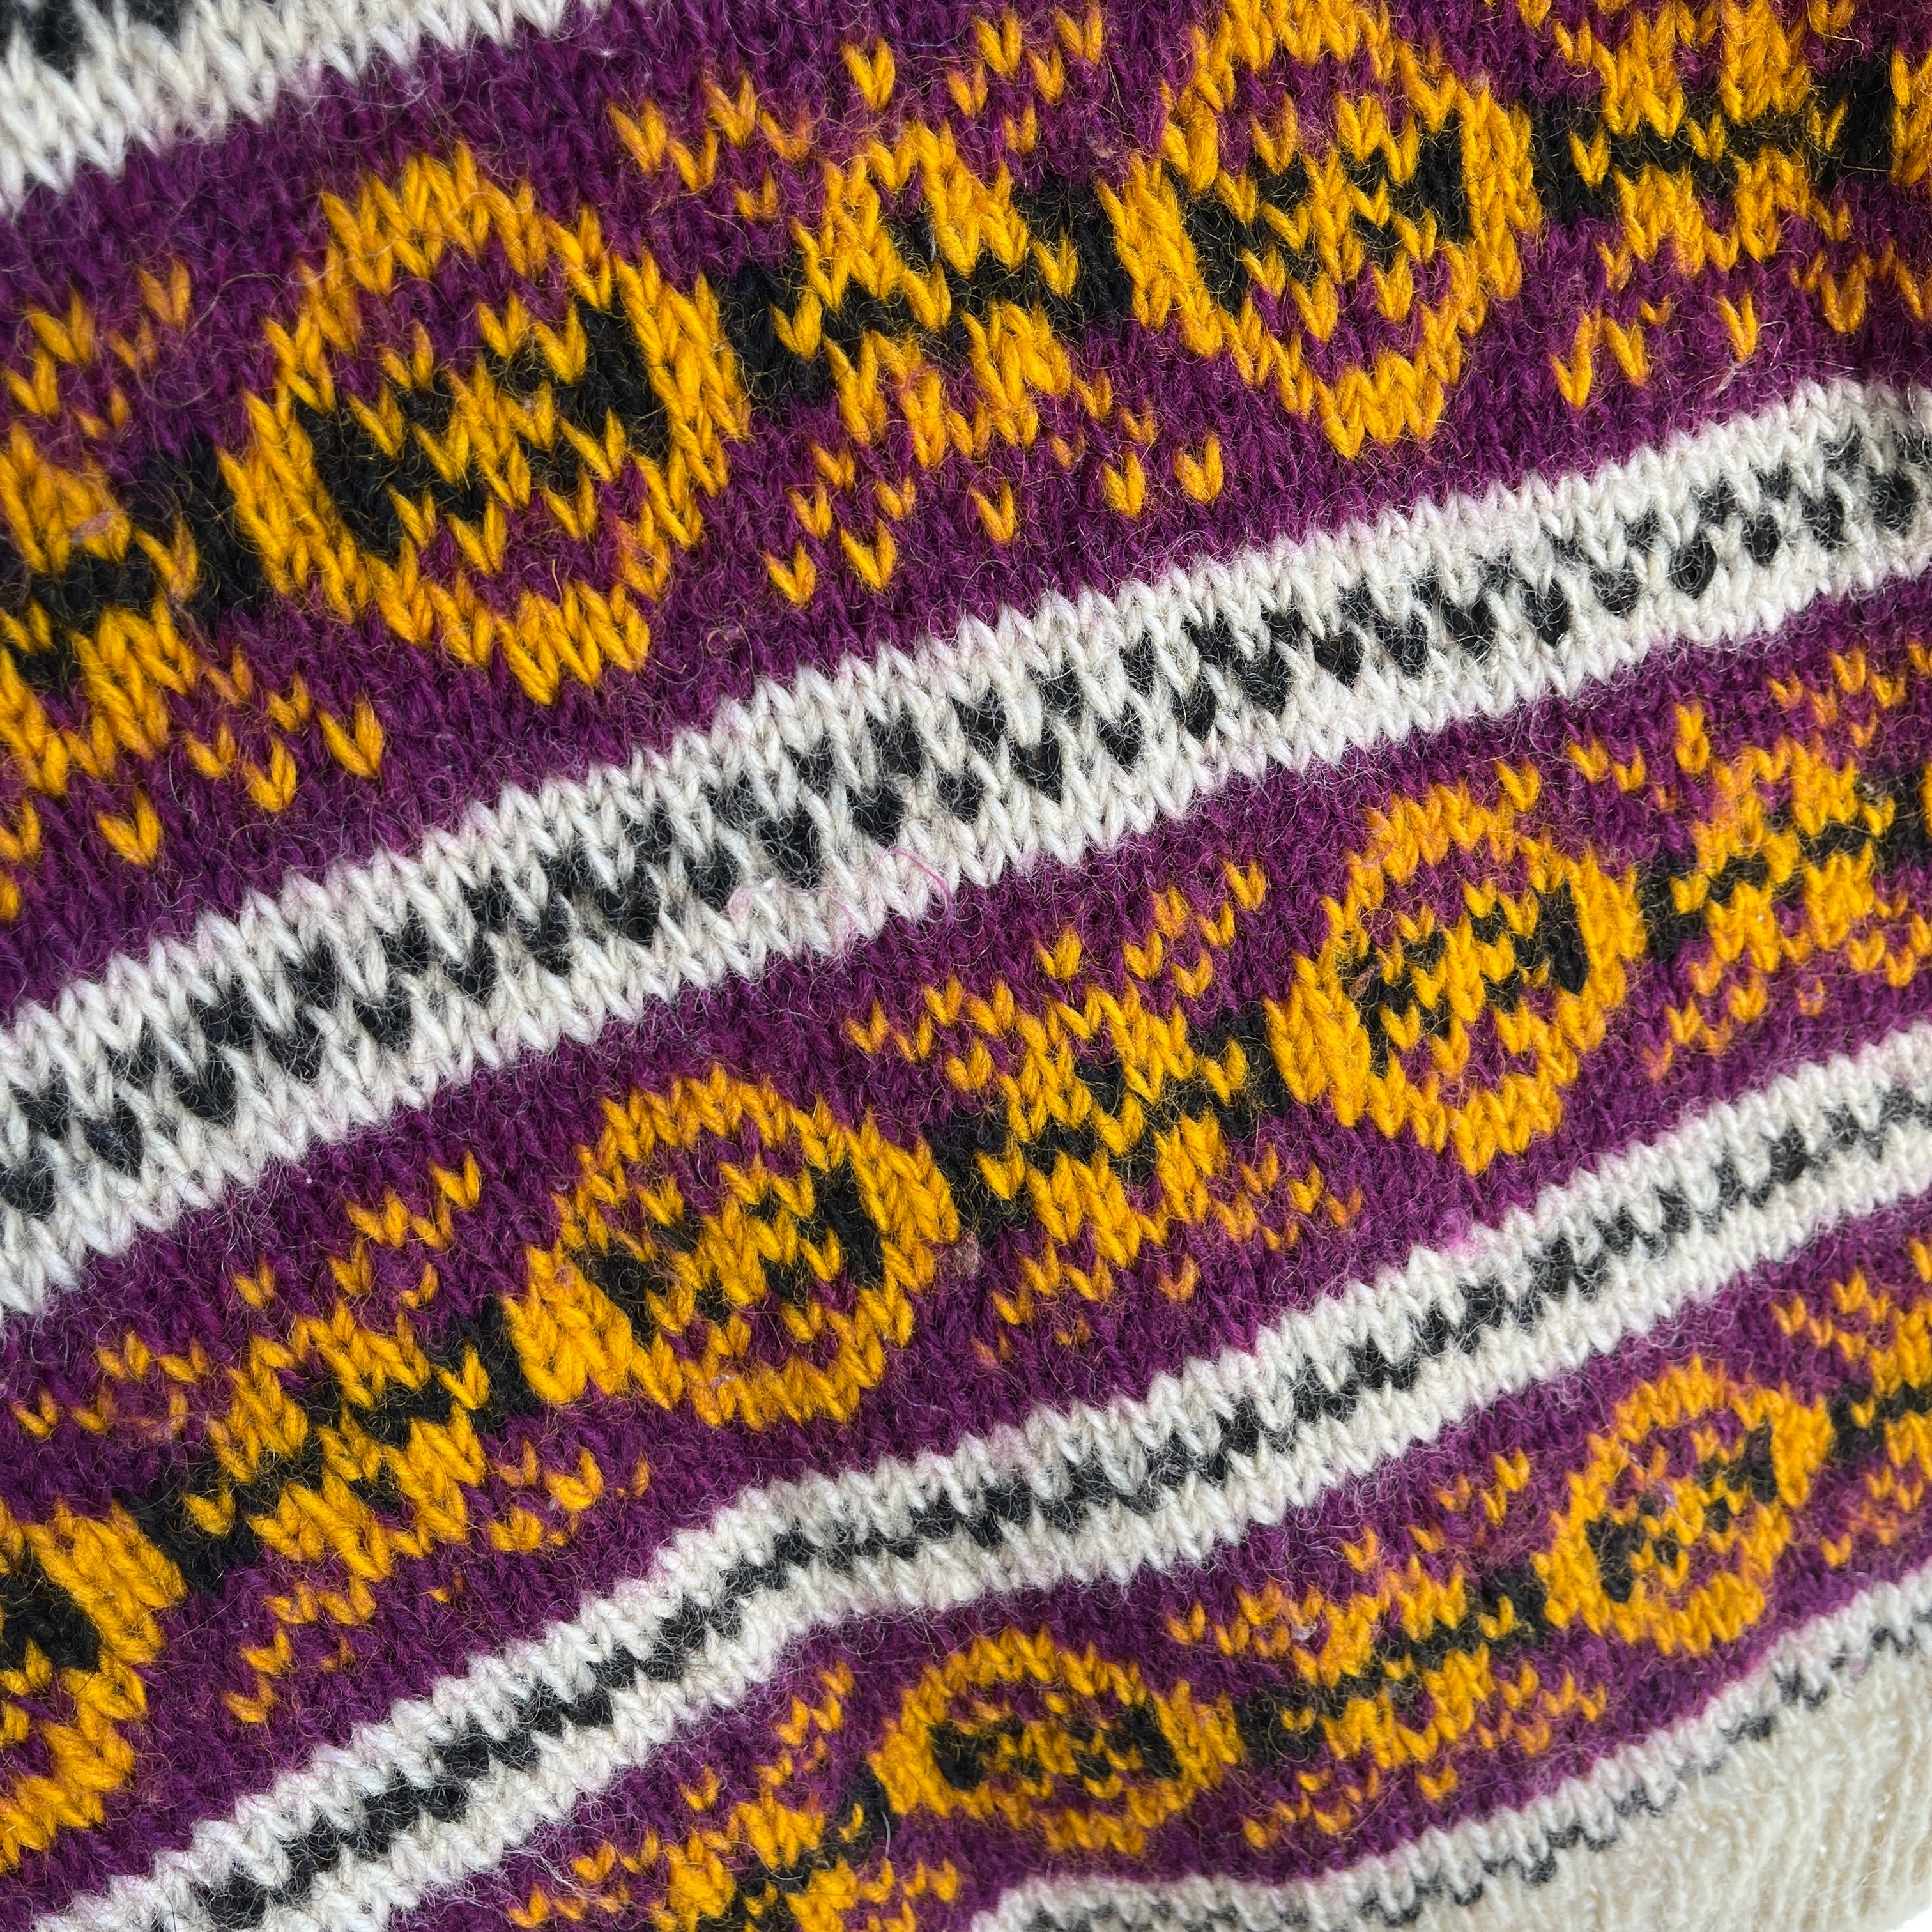 1970/80s Chunky Handknit Wool Sweater - Dreamy